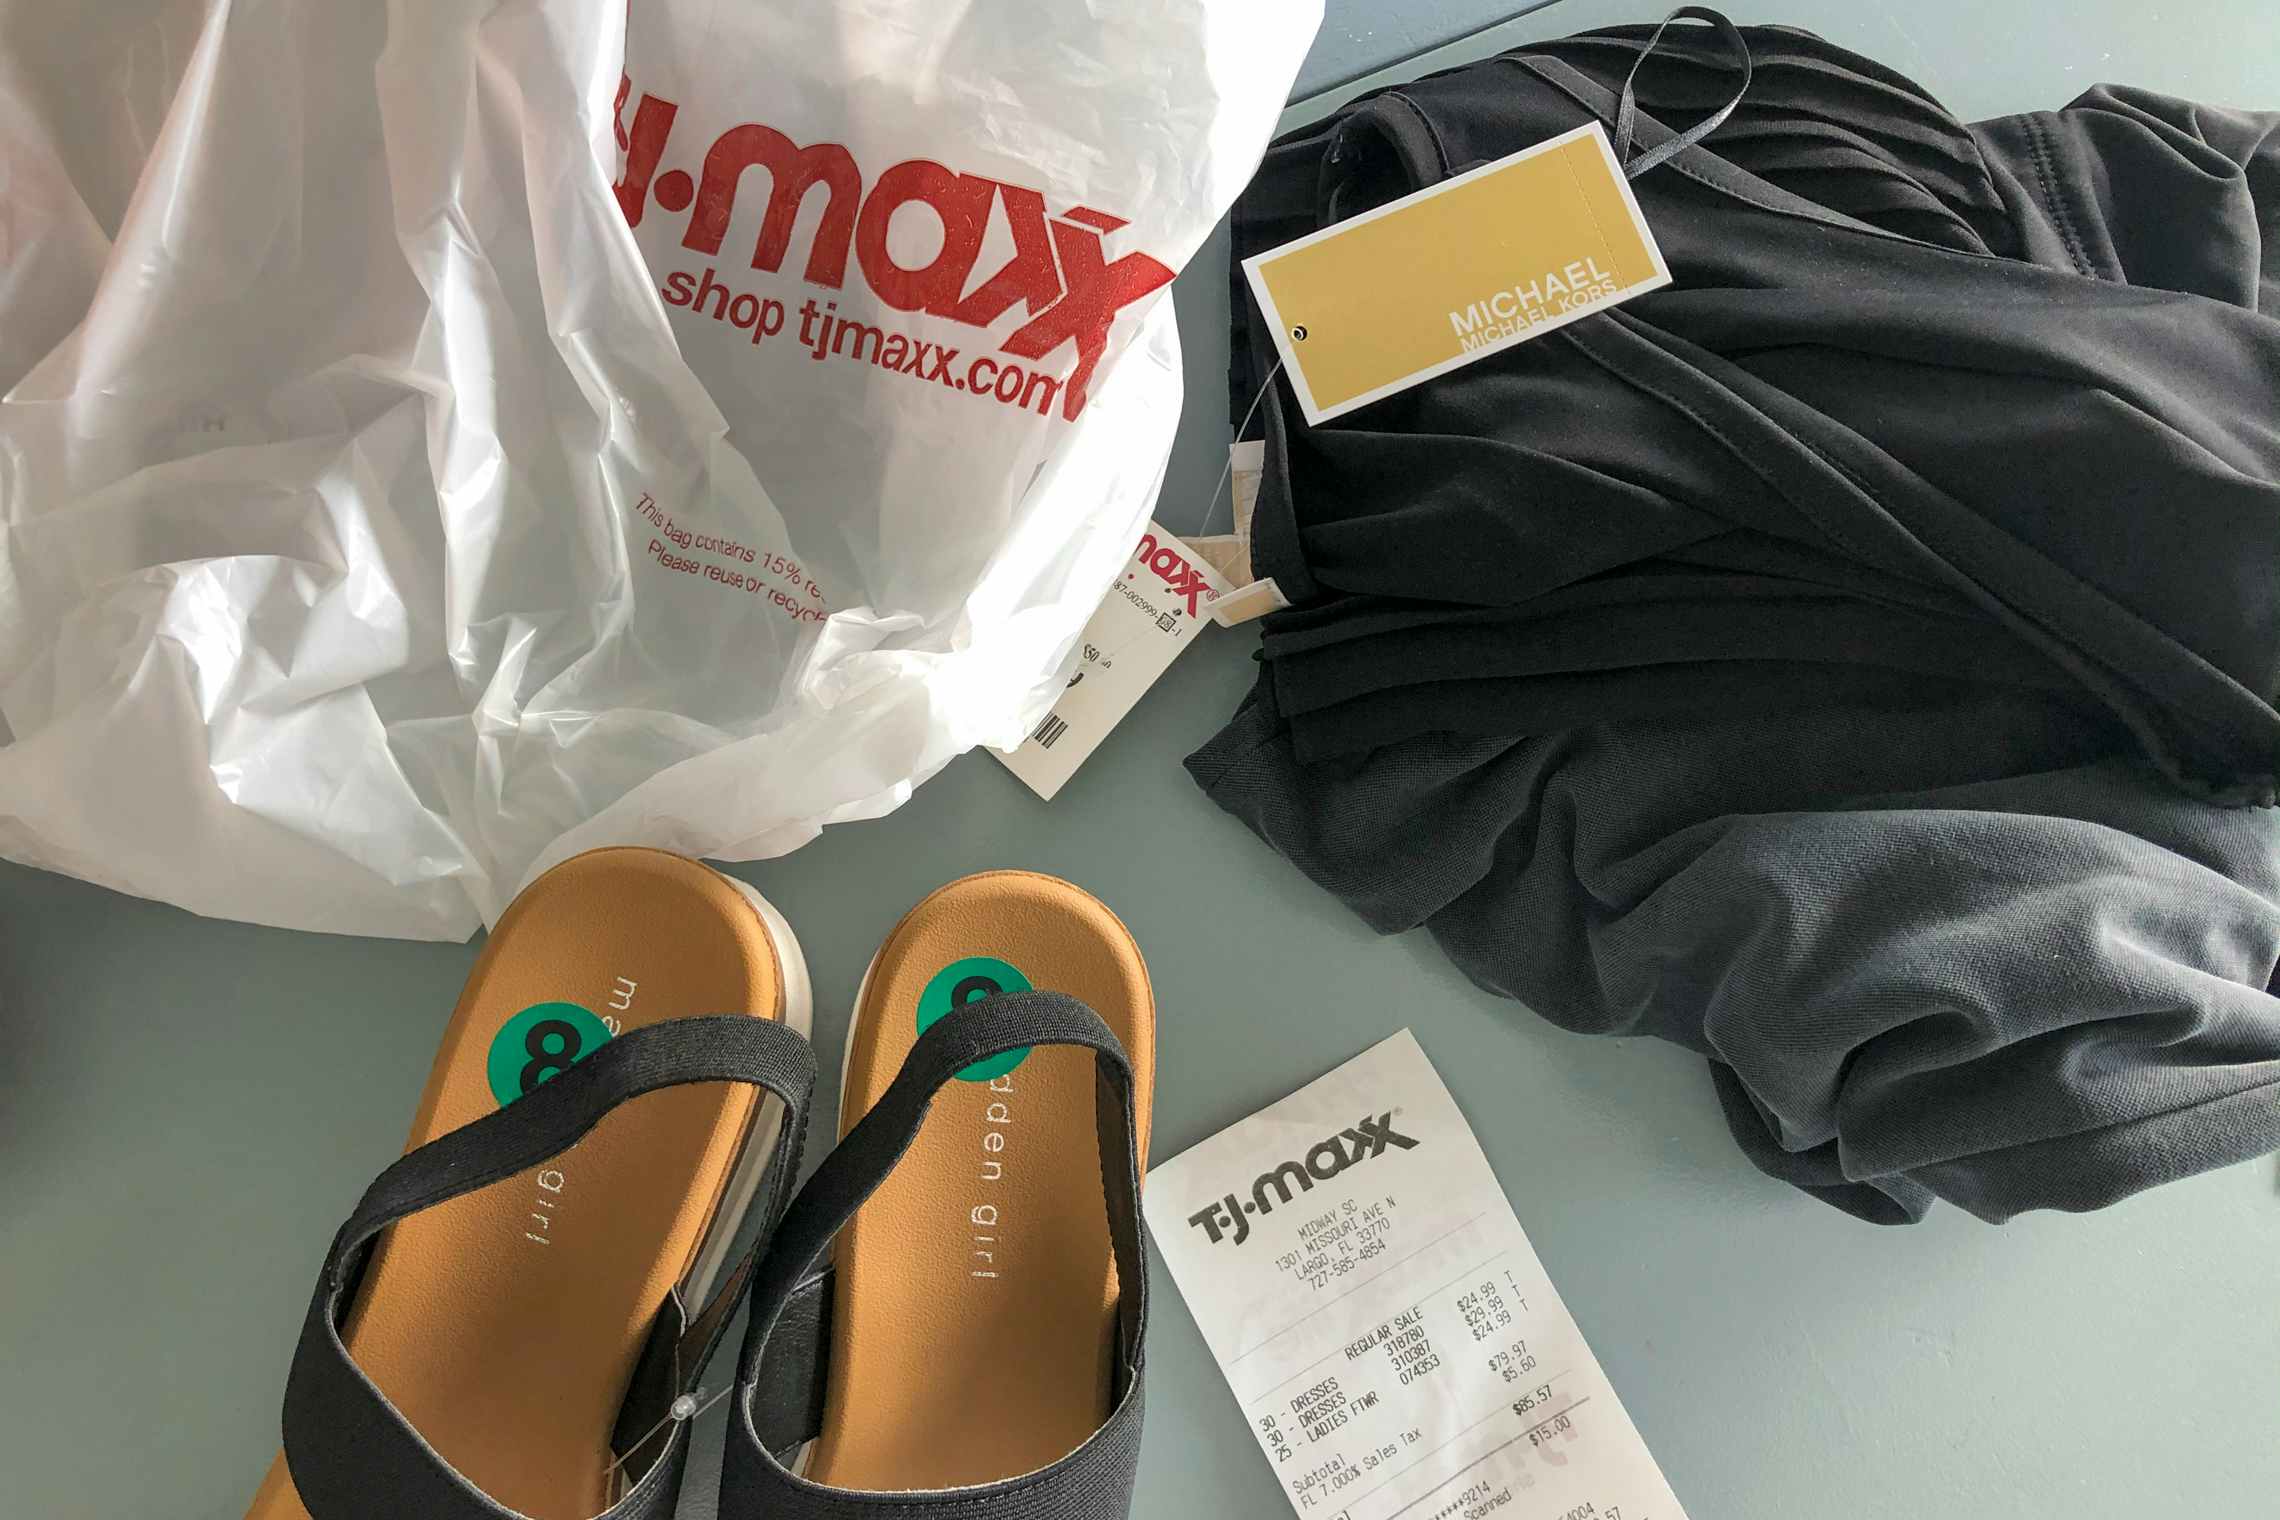 TJ Maxx shopping bag, receipt, shoes, and dress